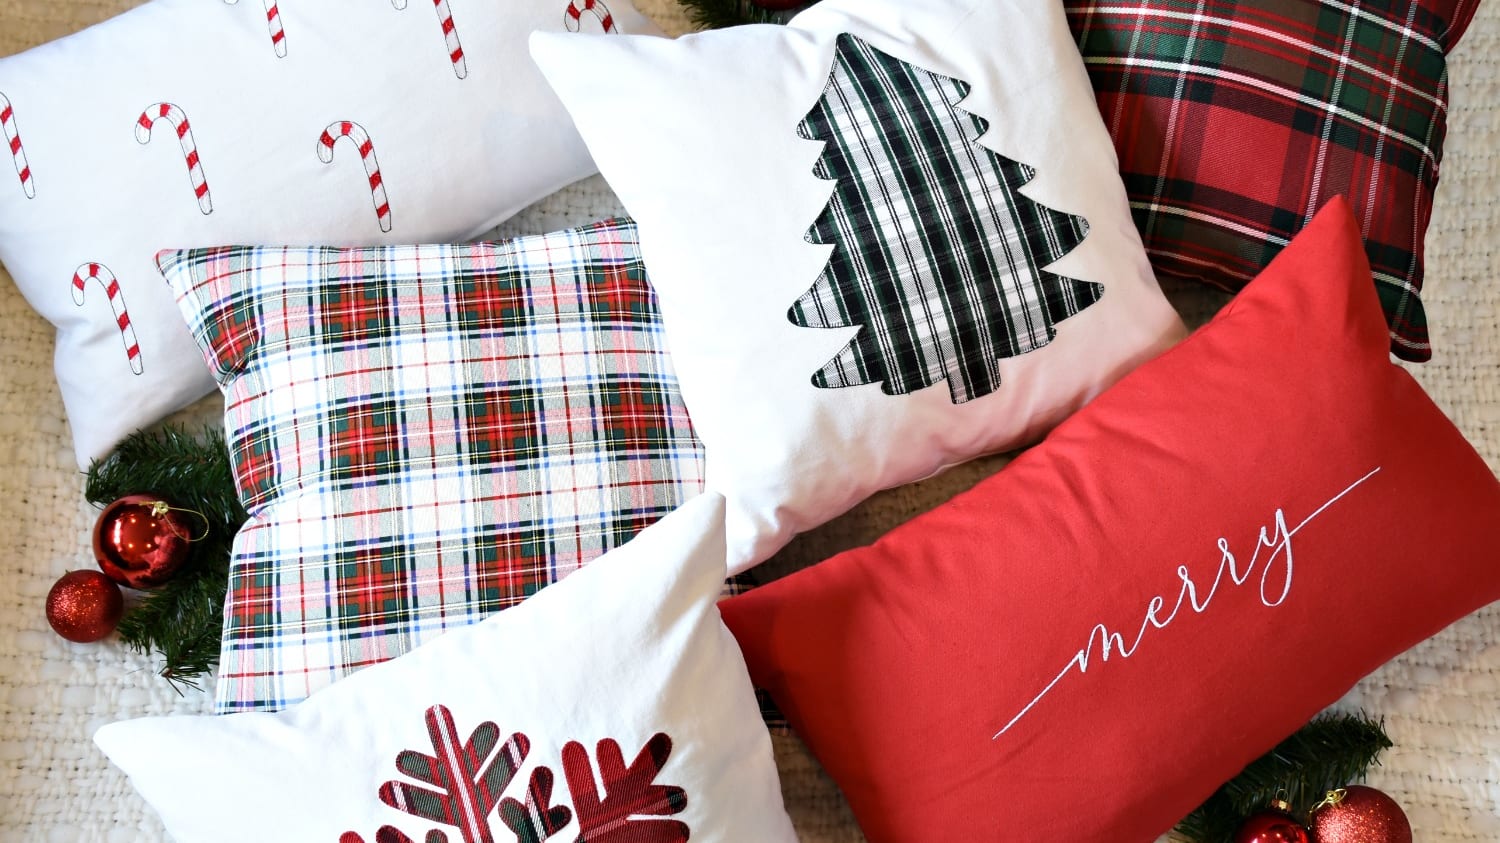 Christmas Ornaments DIY Decorative Pillow Stencil Kit - DIY Accent Pillows  for Christmas Decor